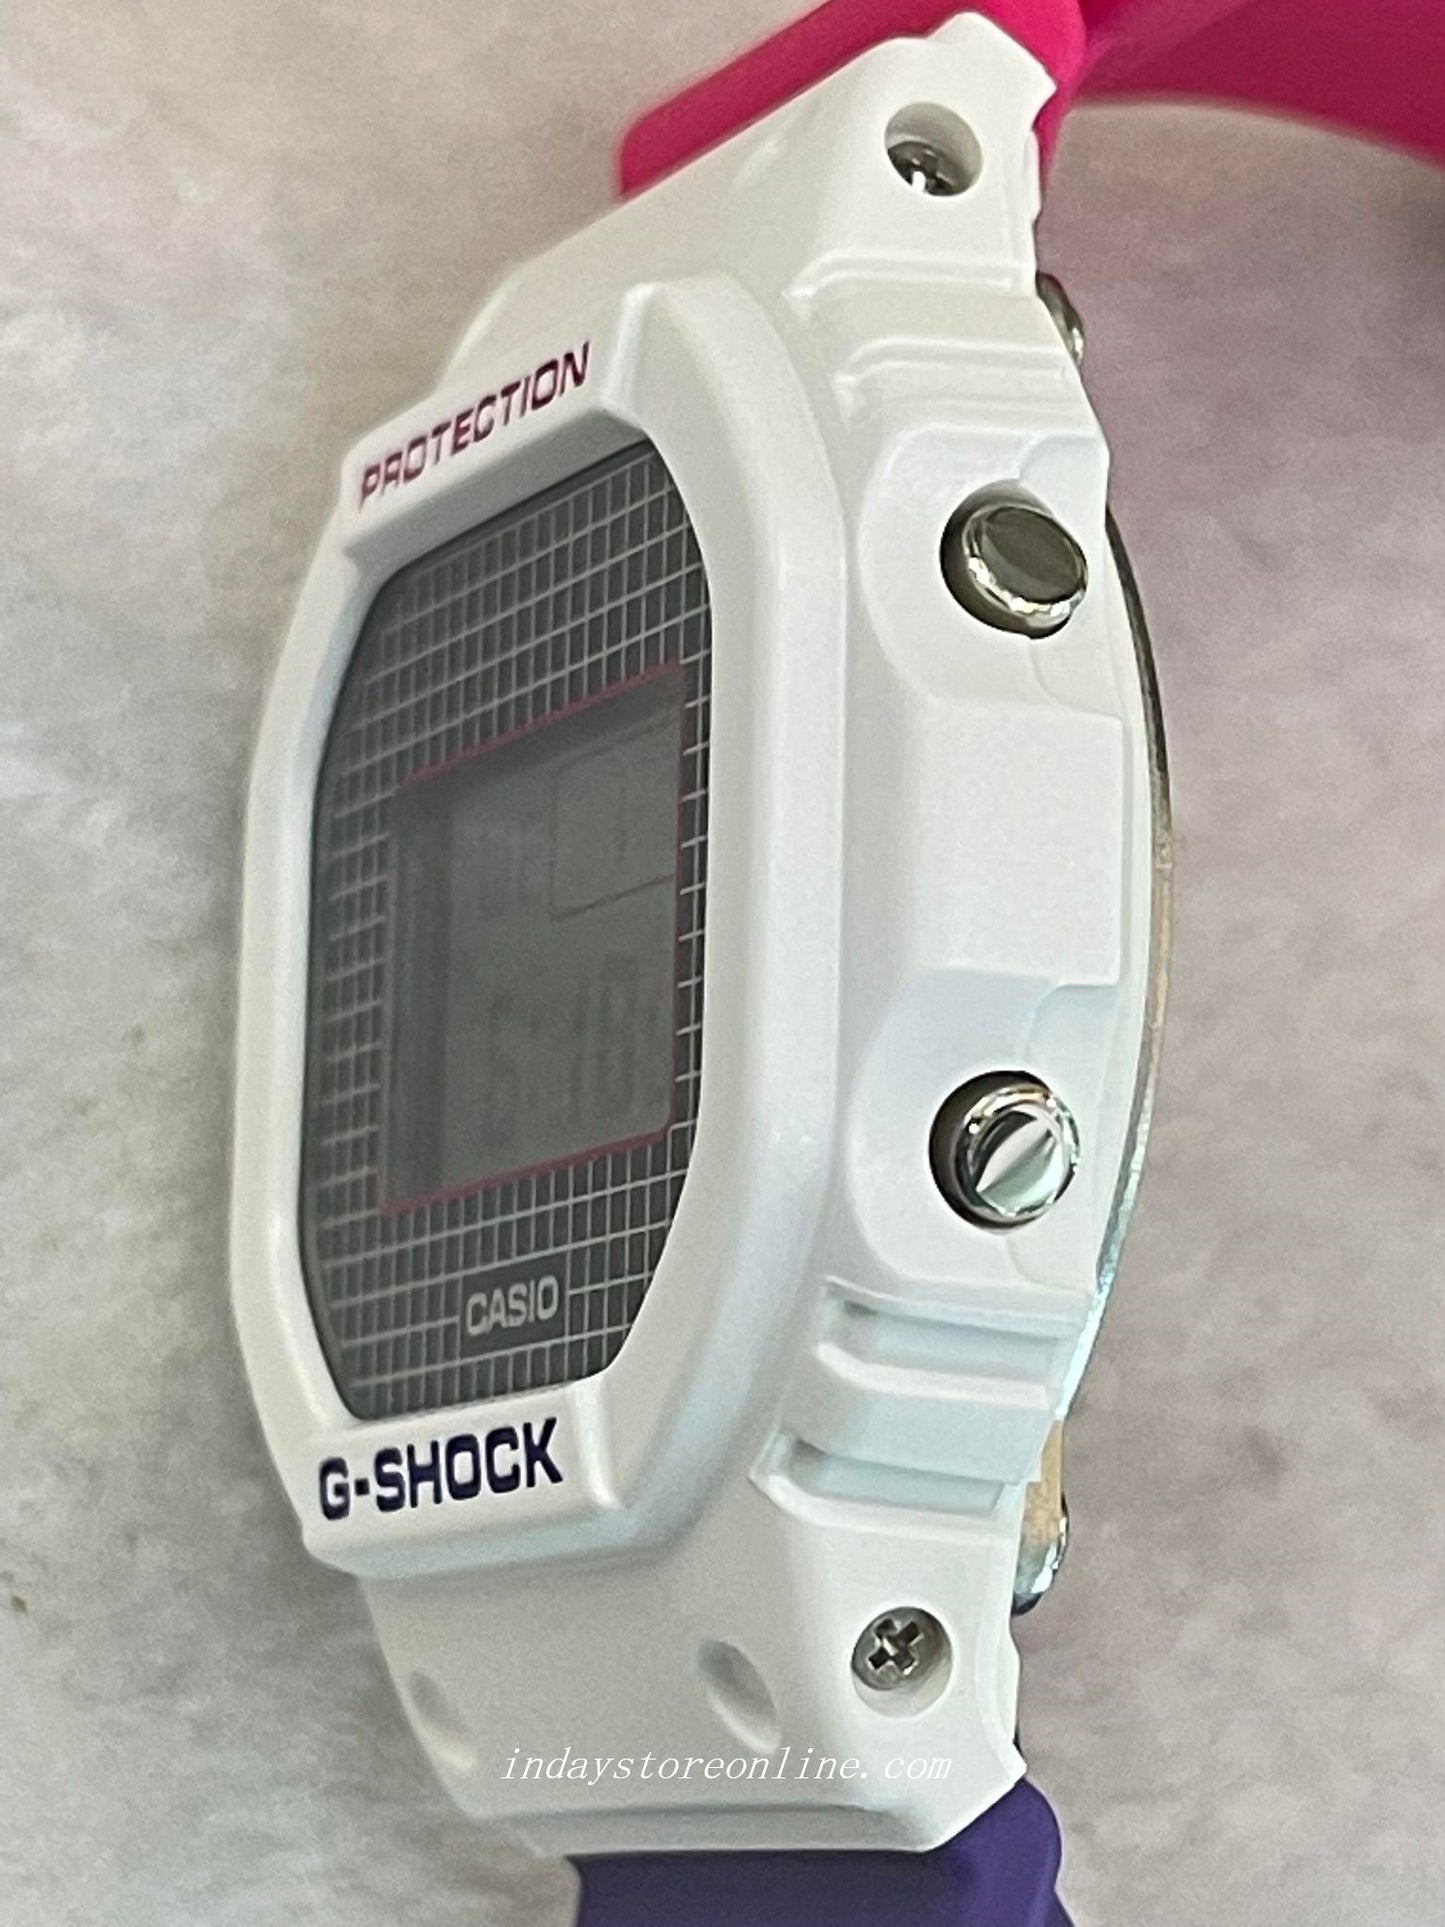 Casio G-Shock Men's Watch DW-5600THB-7 Digital 5600 Series Resin Band Shock Resistant